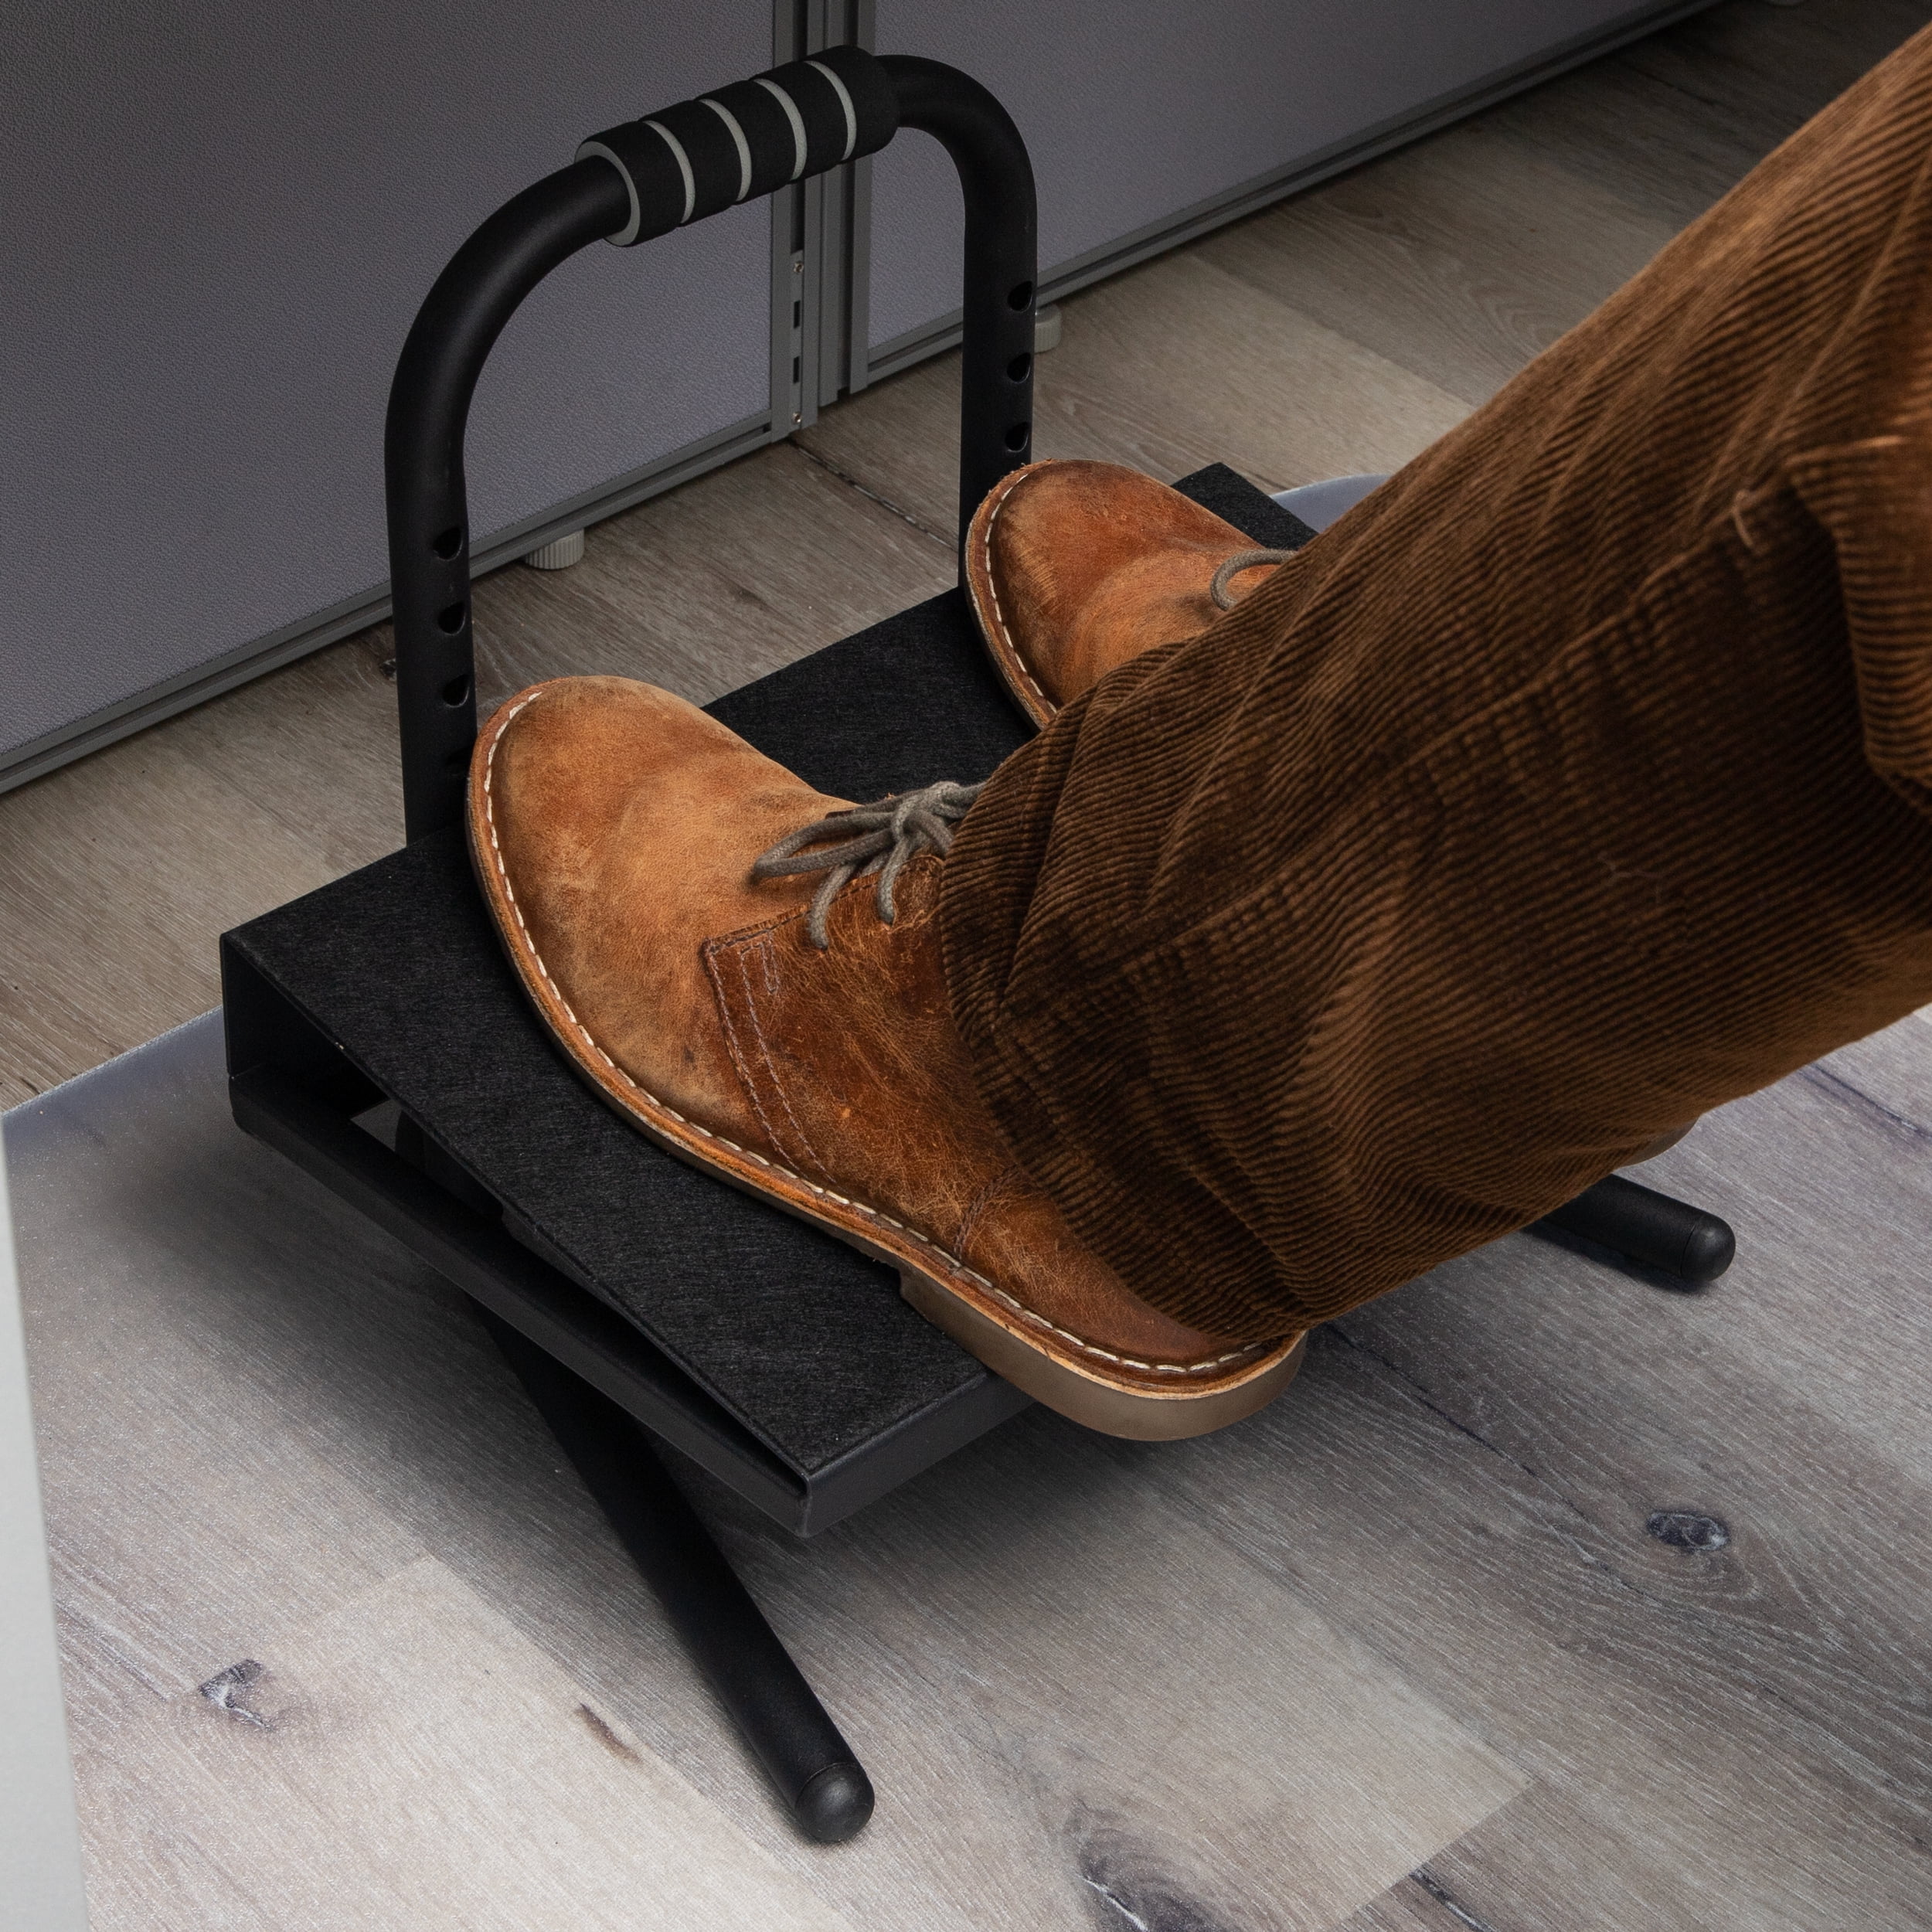 Mind Reader Ergonomic Foot Rest, Height Adjustable Non-Slip